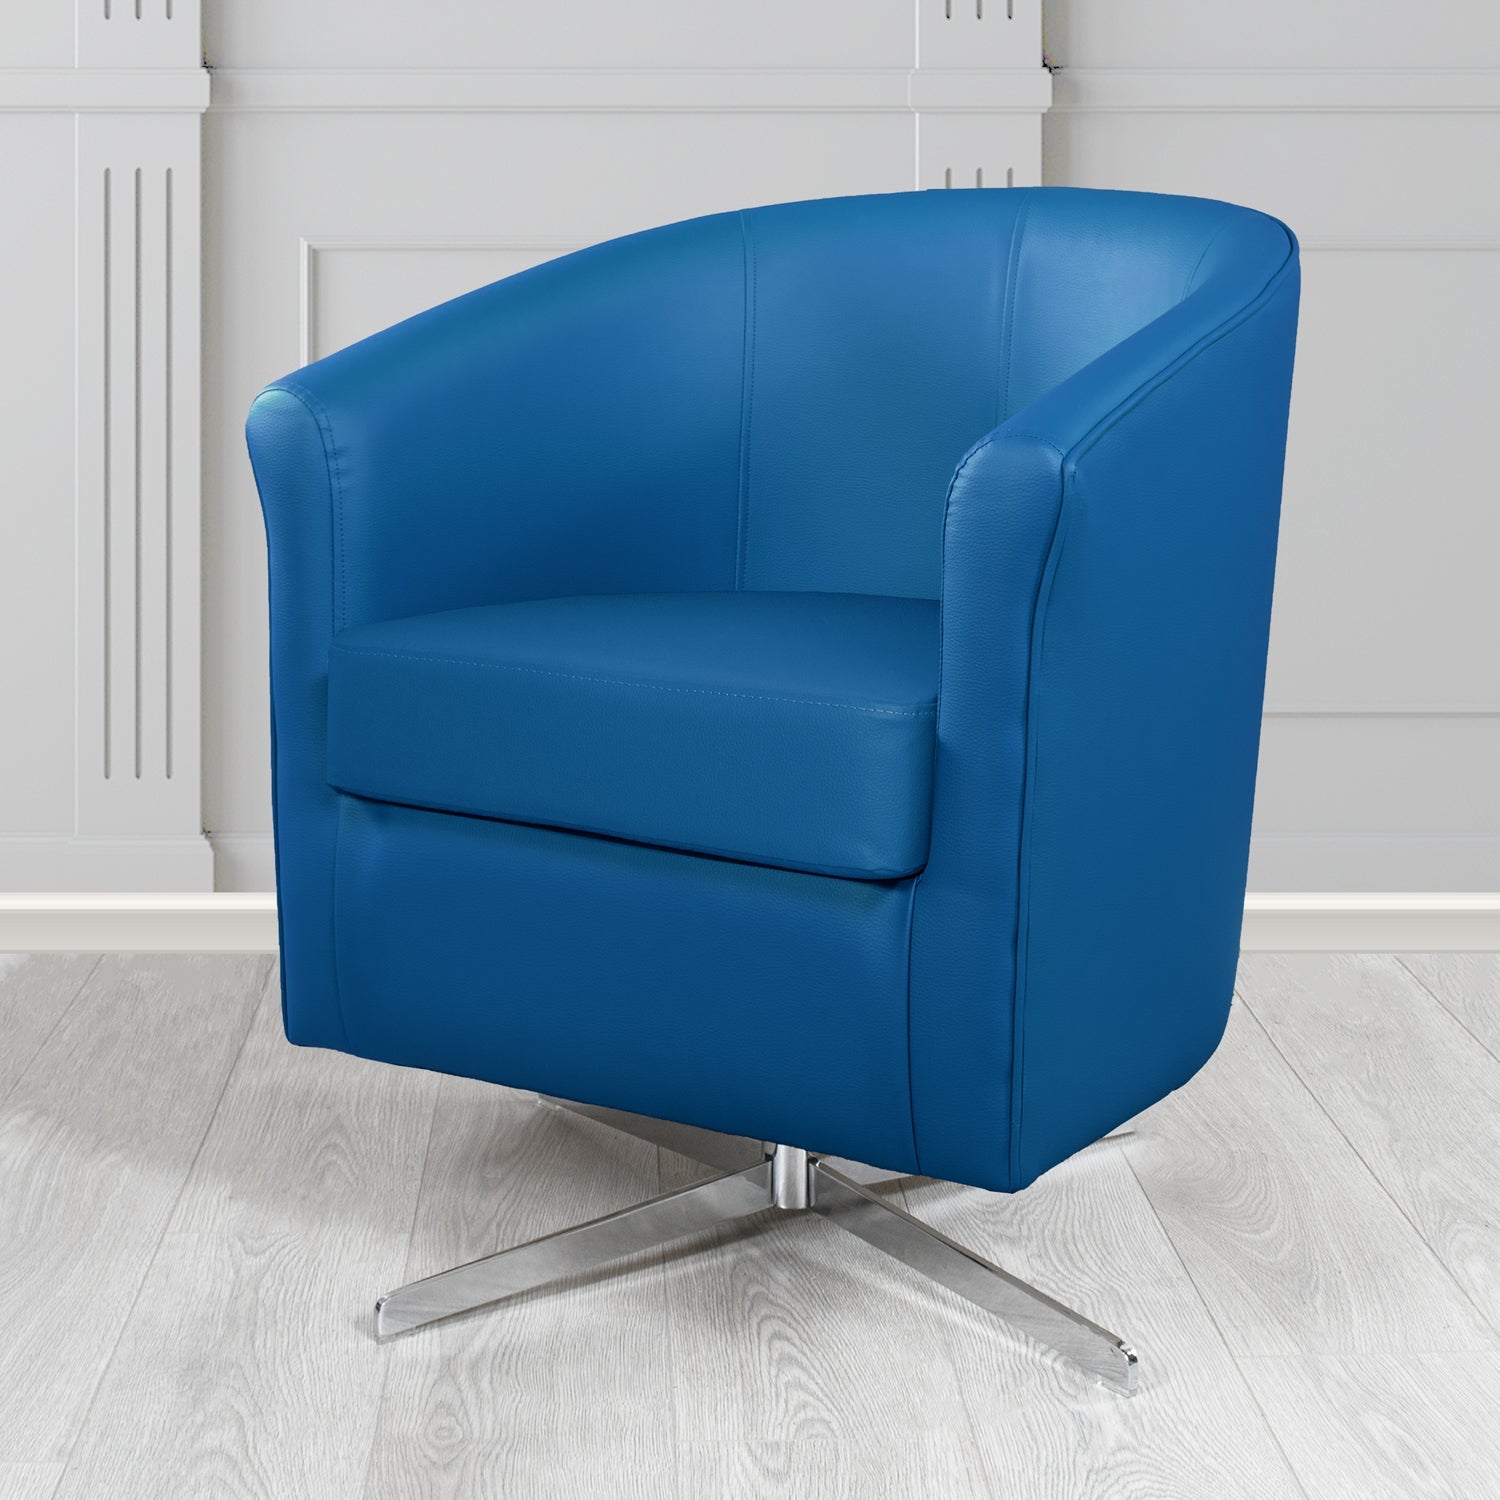 Cannes Swivel Tub Chair in Just Colour Ocean Blue Crib 5 Faux Leather - The Tub Chair Shop